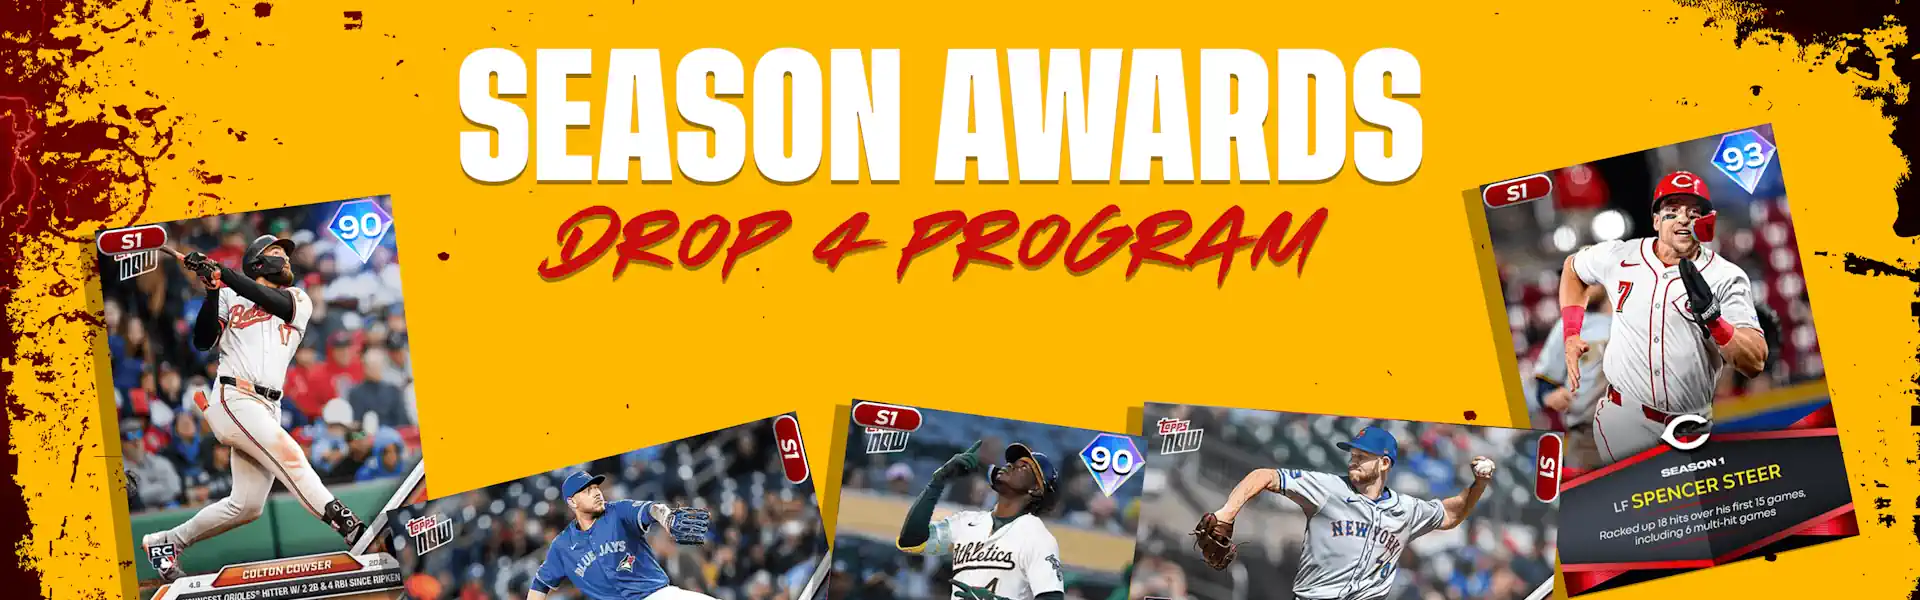 Season Awards Drop 4 Program